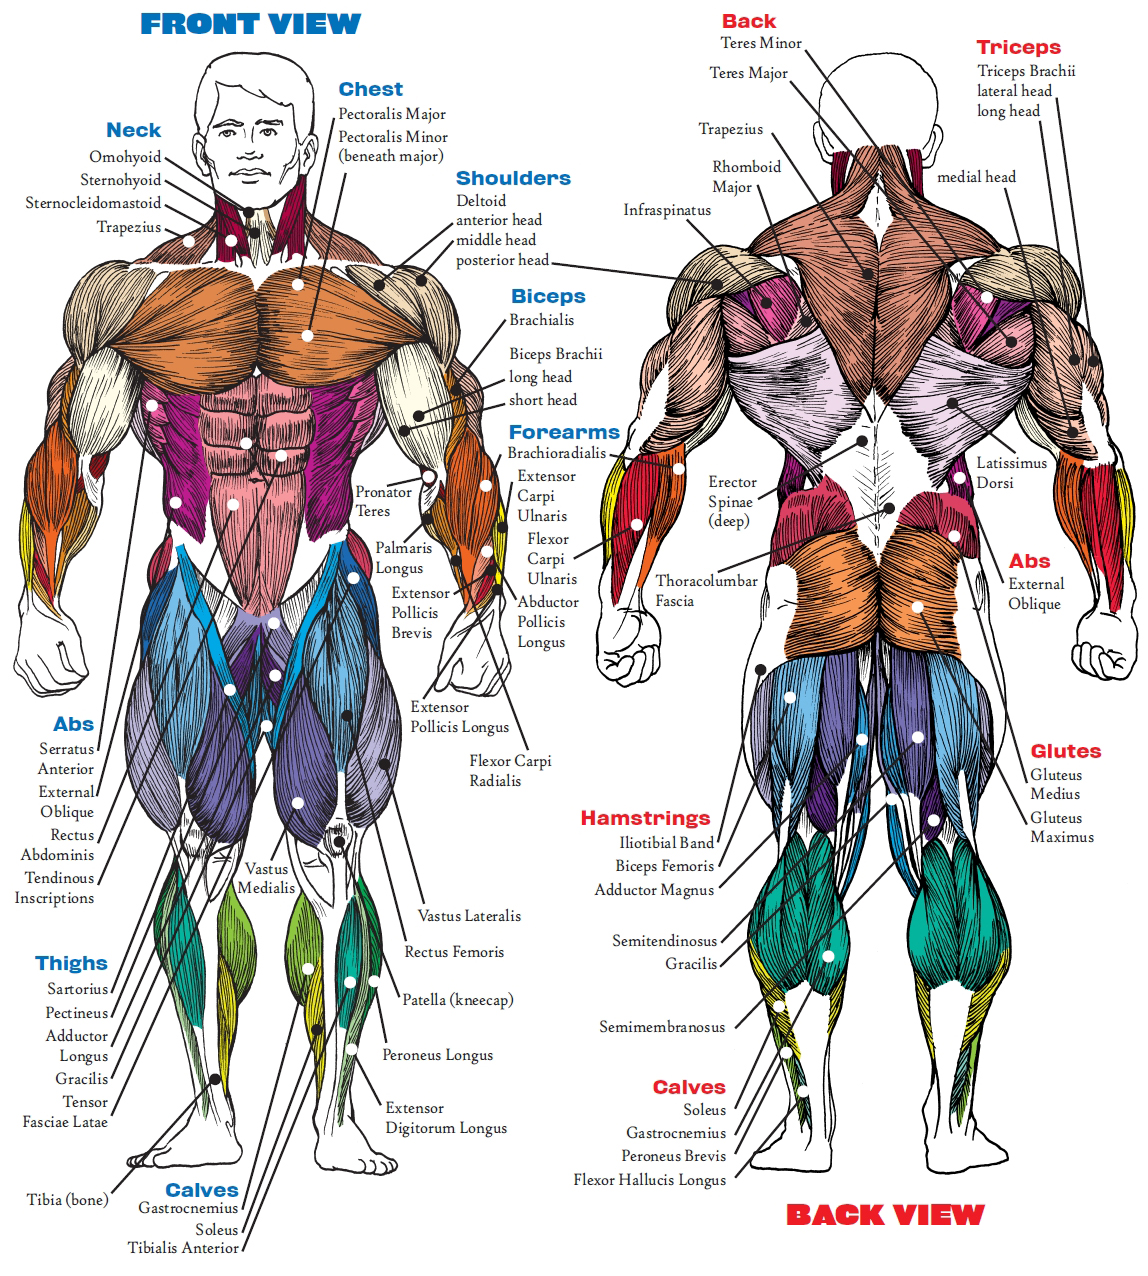 Career Step Diagram Muscles